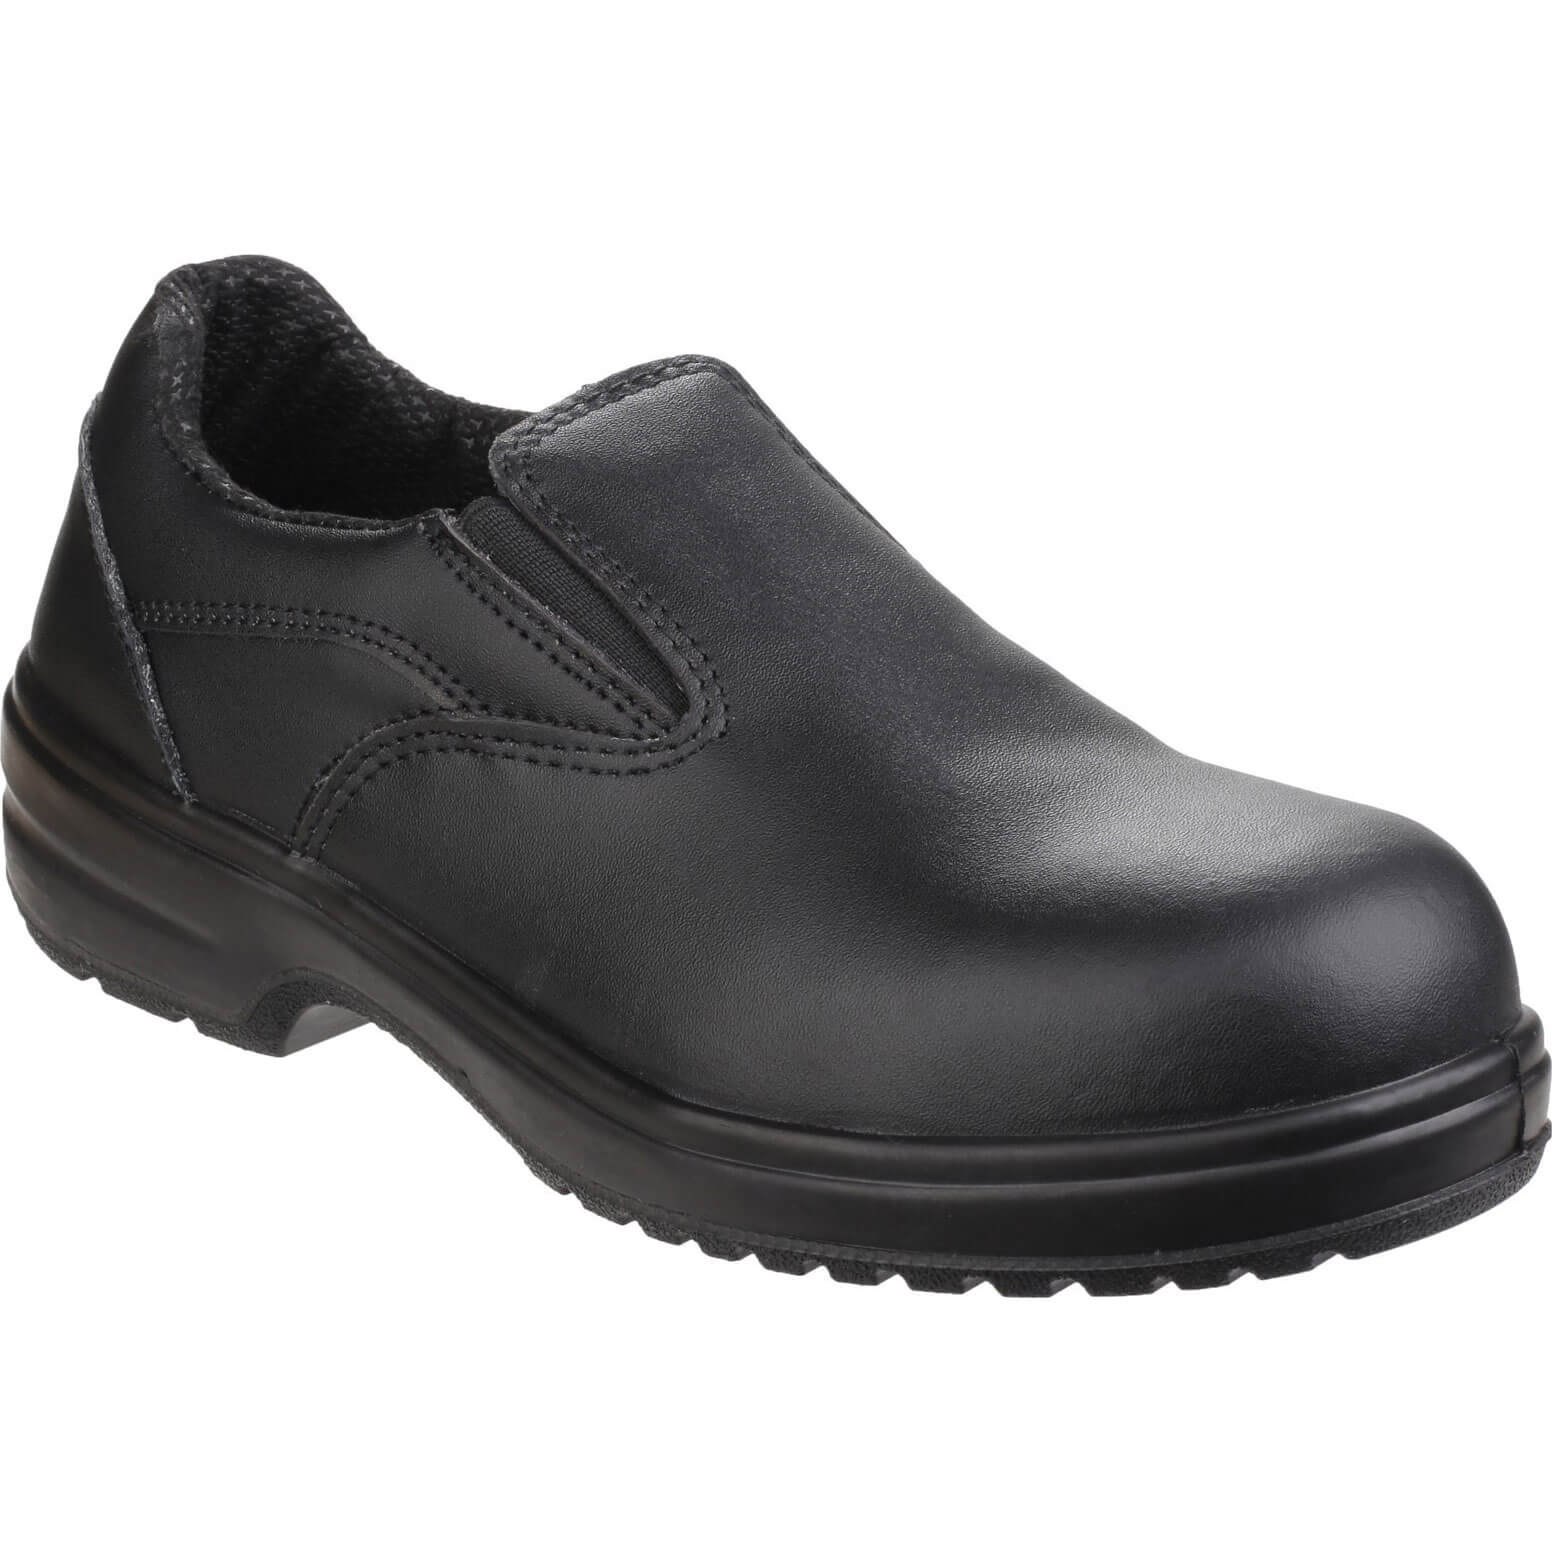 Photo of Amblers Safety Fs94c Lightweight Slip On Safety Shoe Black Size 7